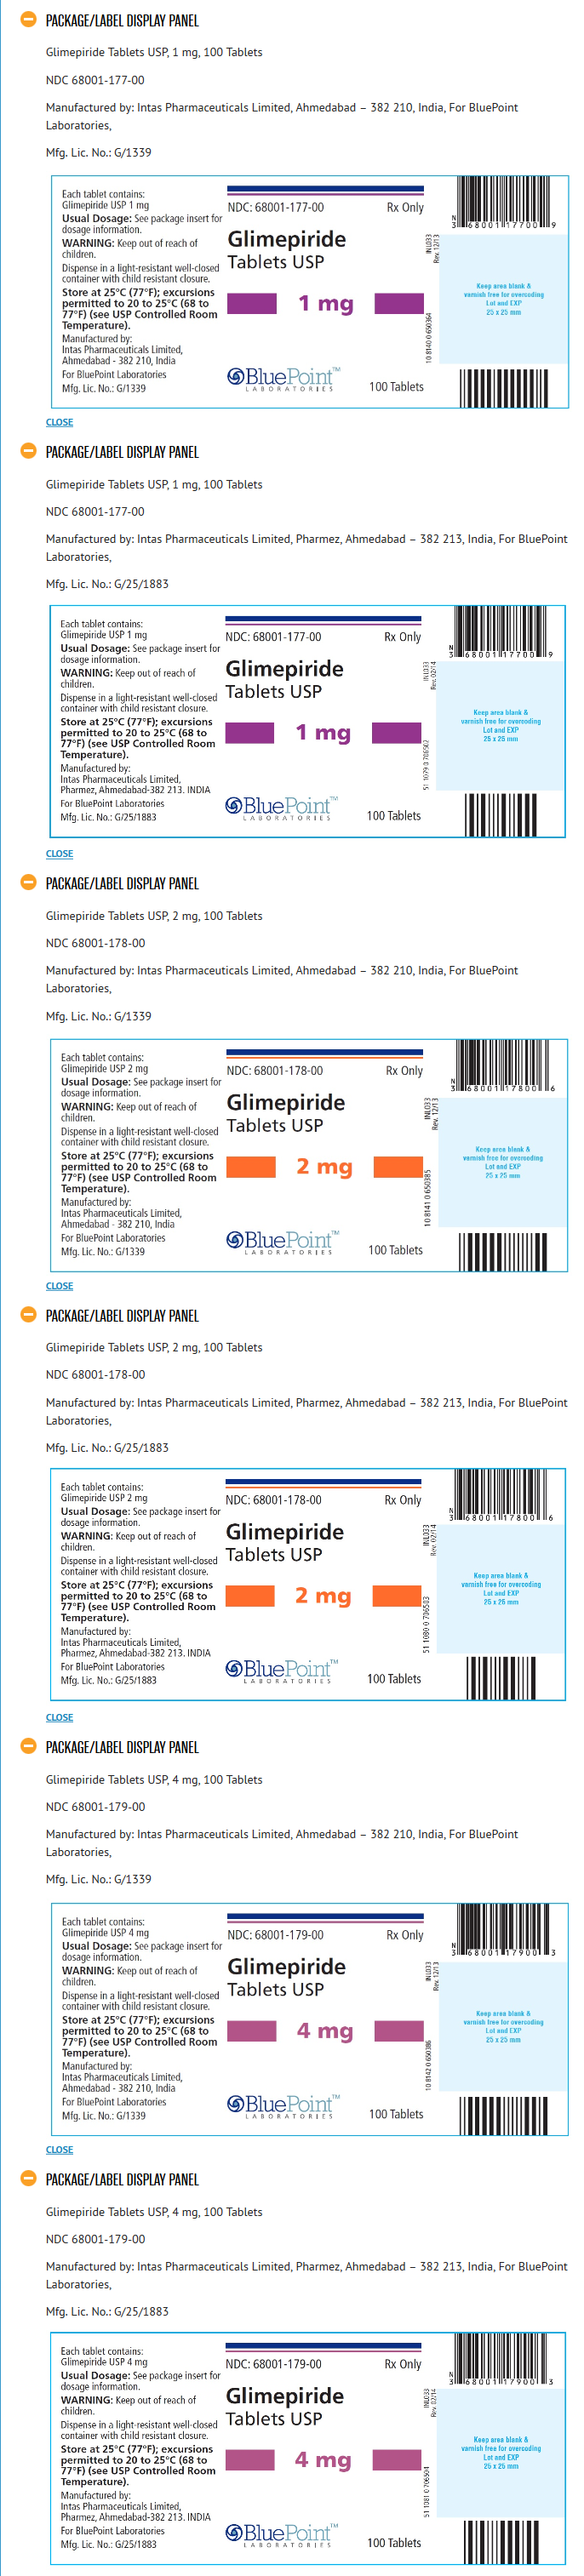 File:Glimepiride pdp.png